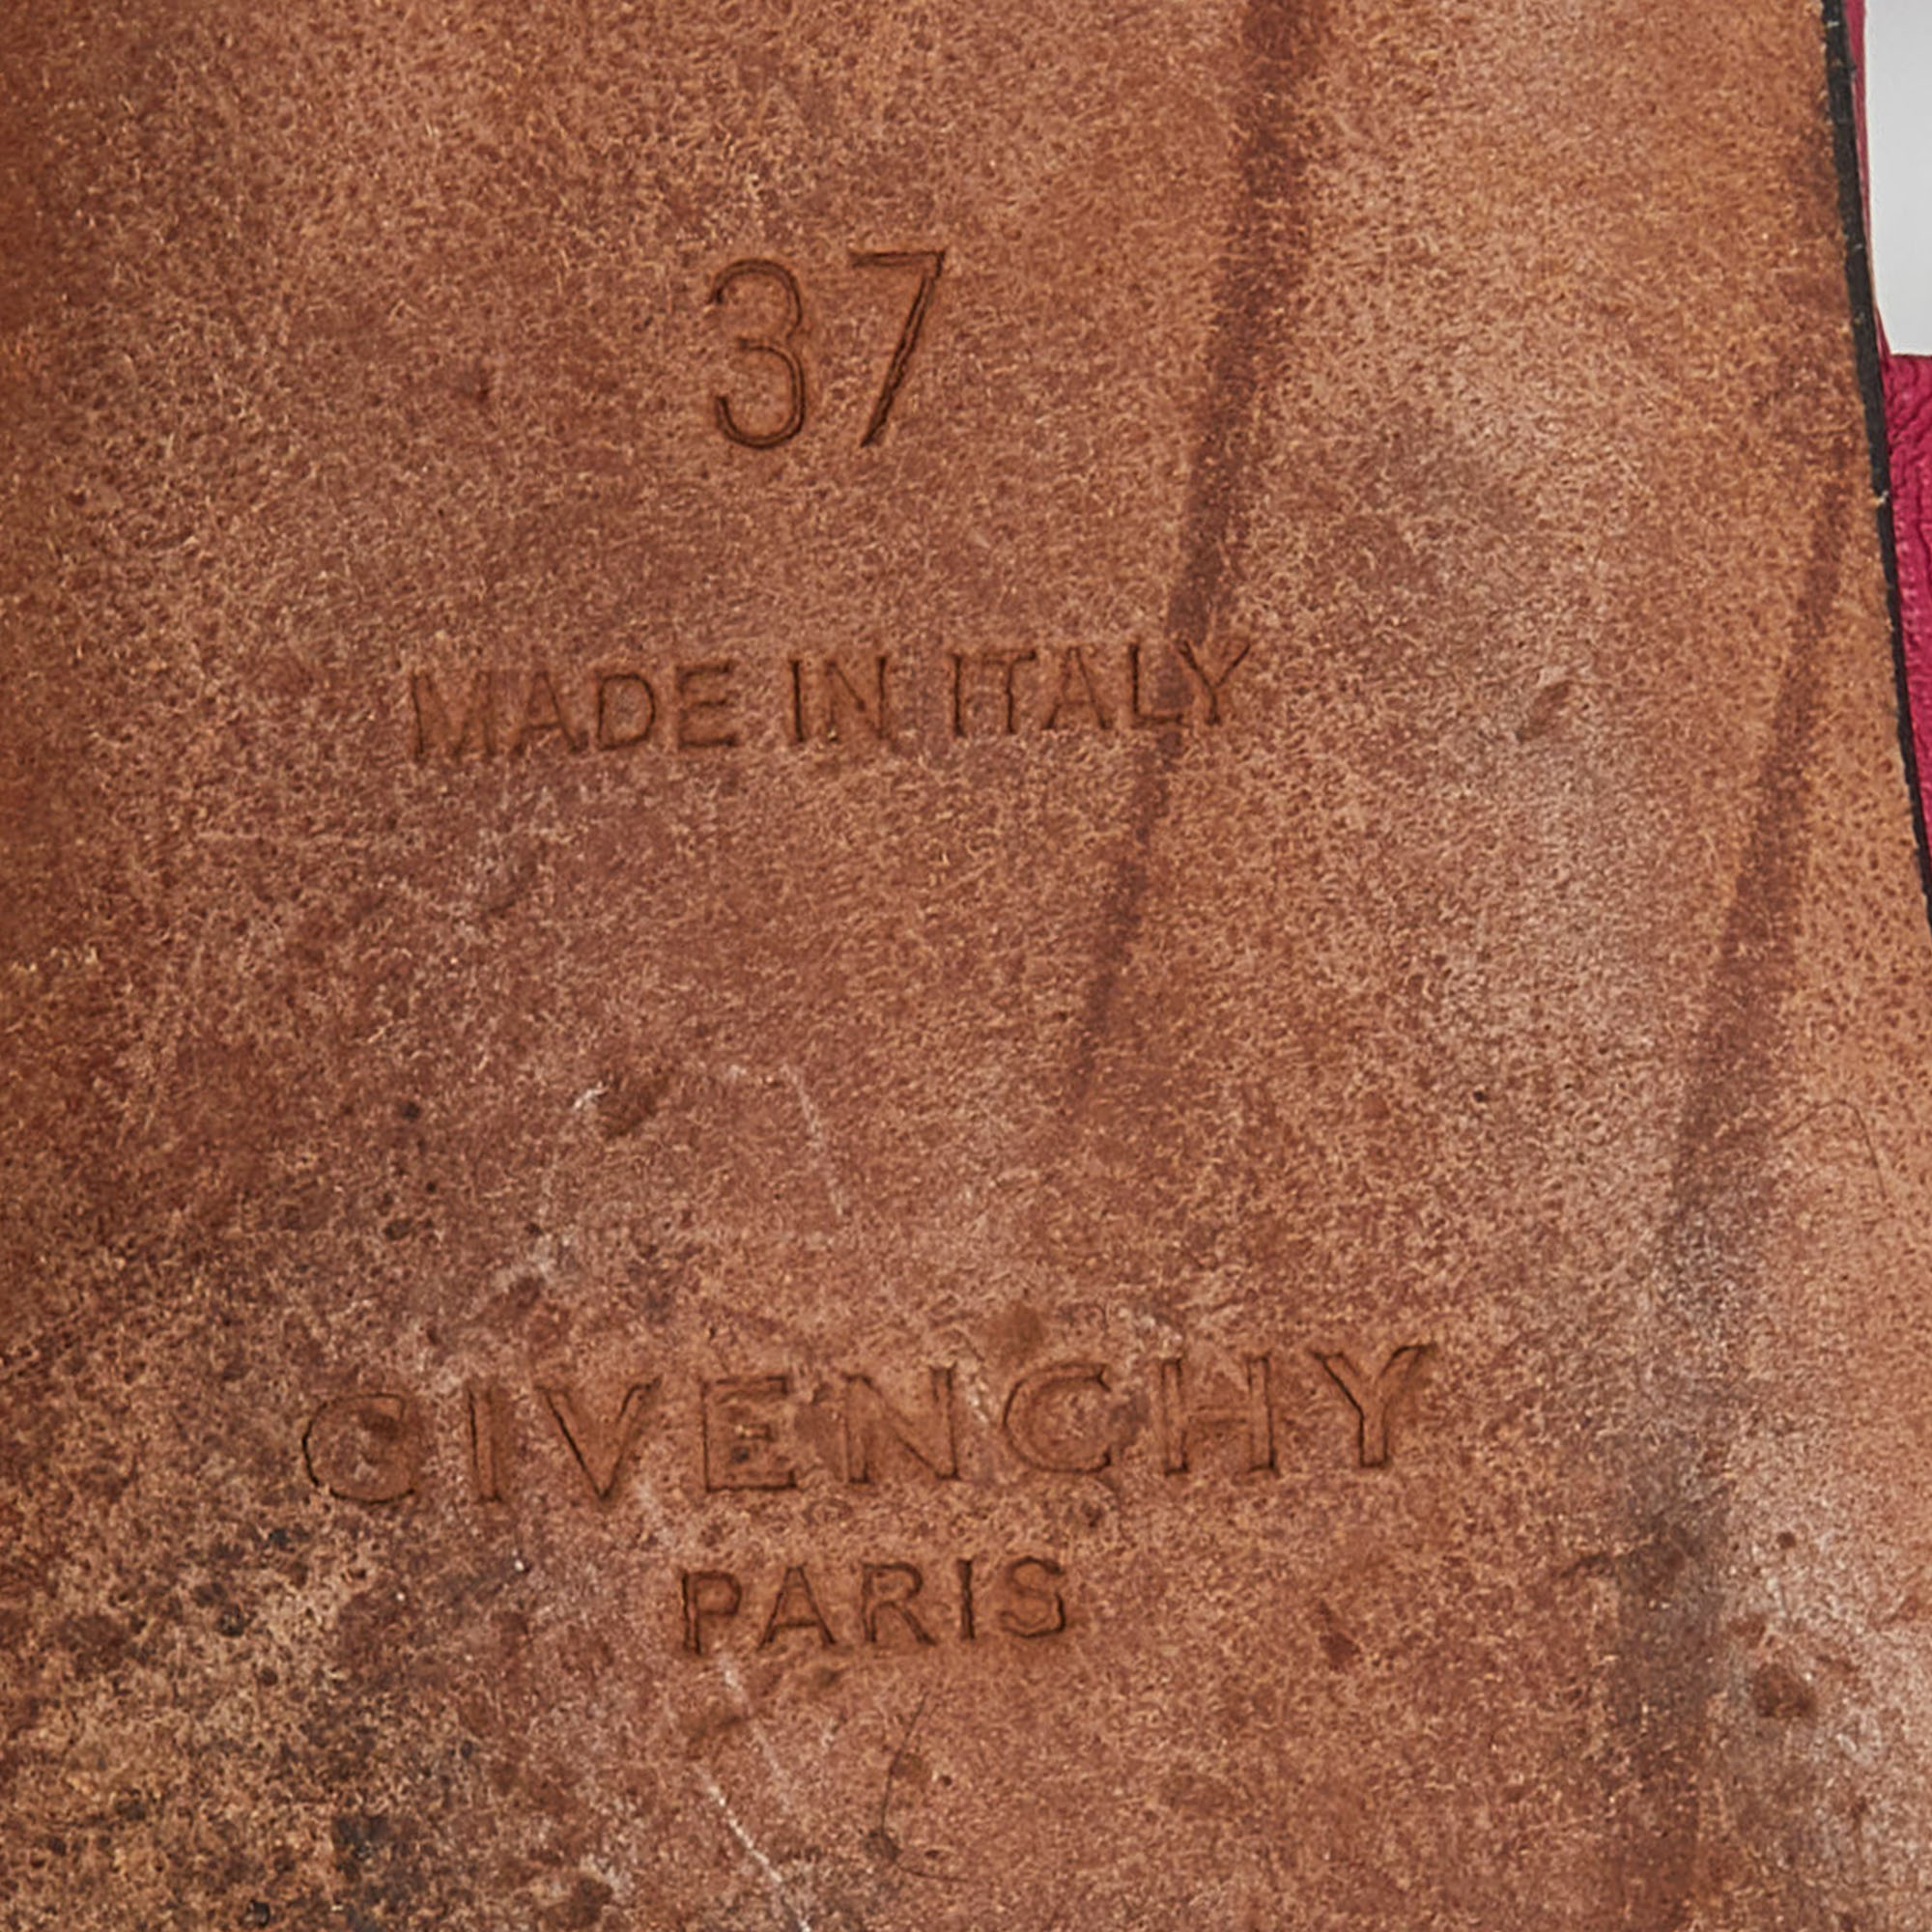 Givenchy Pink Leather Rivington Slingback Flats Size 37